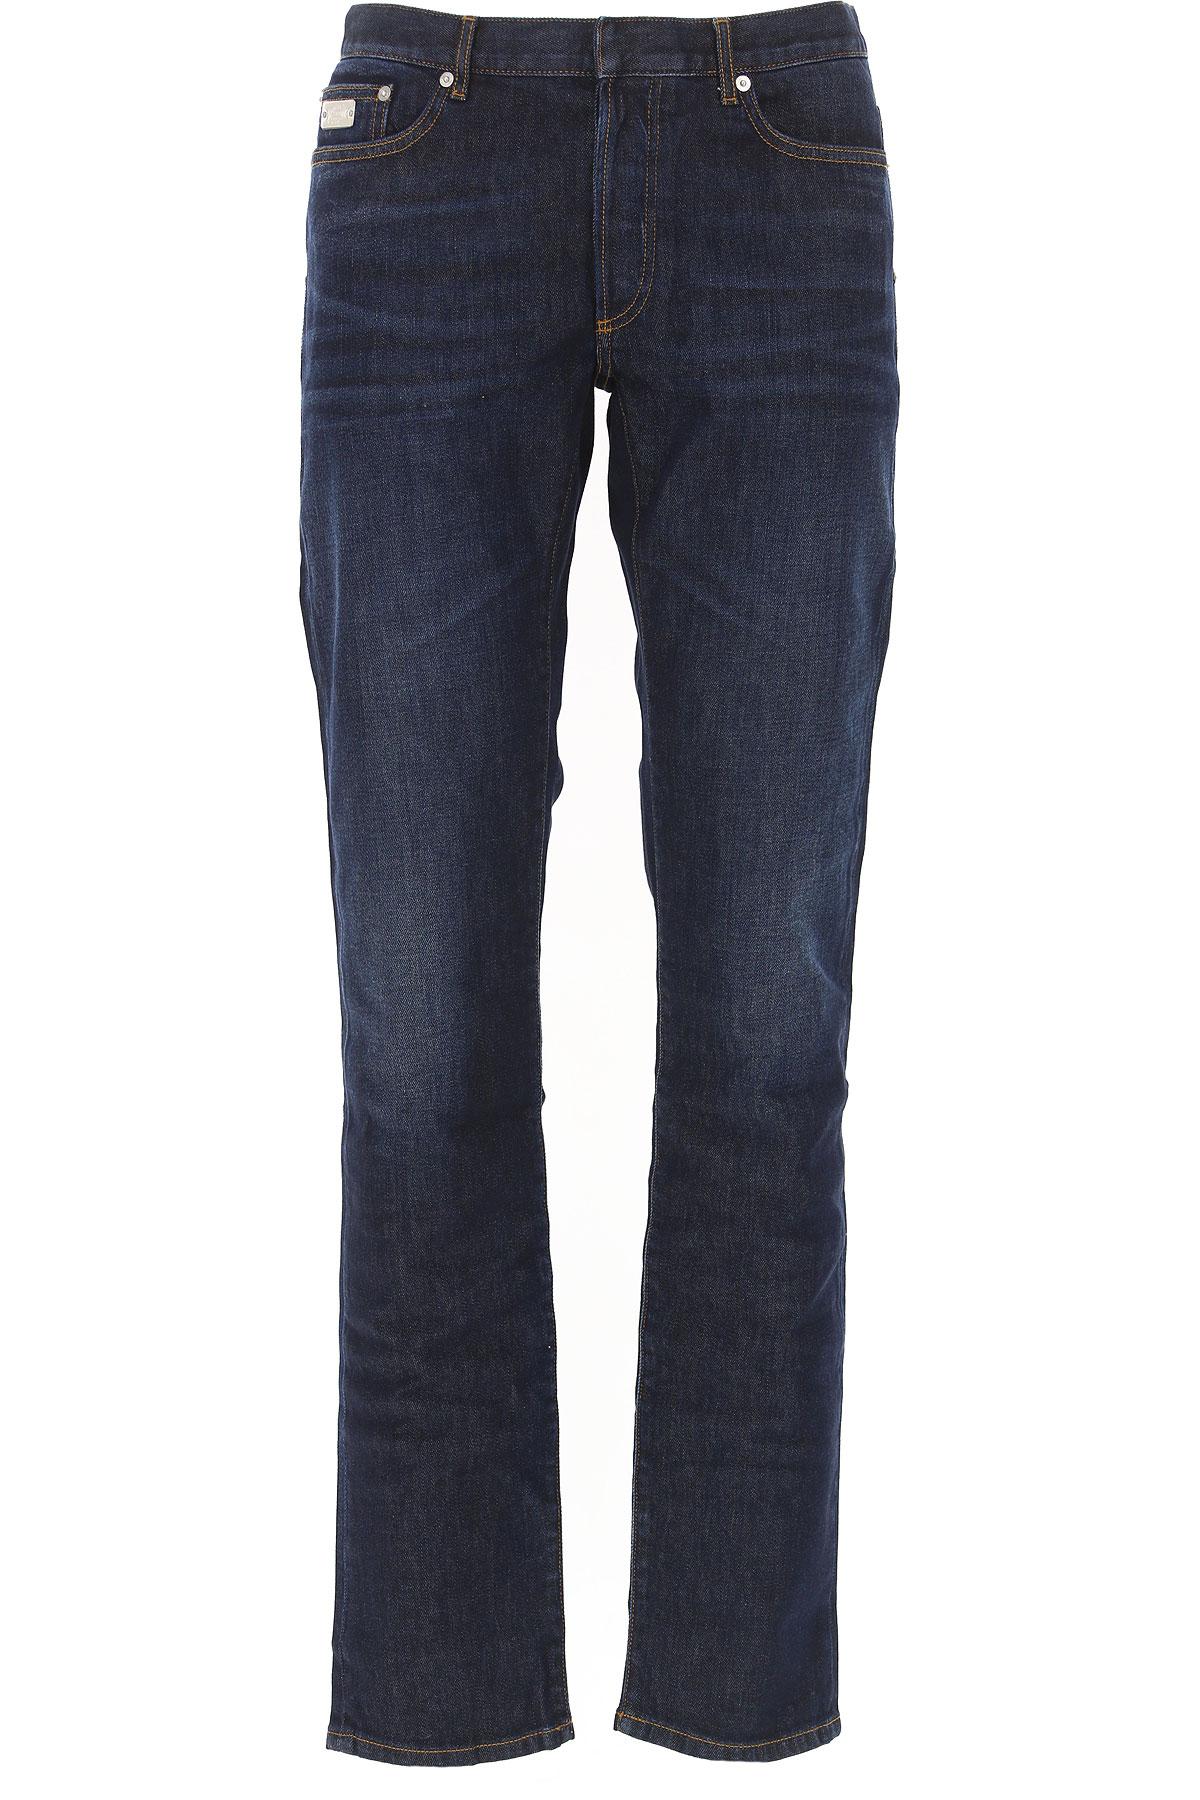 Dior Denim Jeans On Sale in Blue Marine (Blue) for Men - Lyst